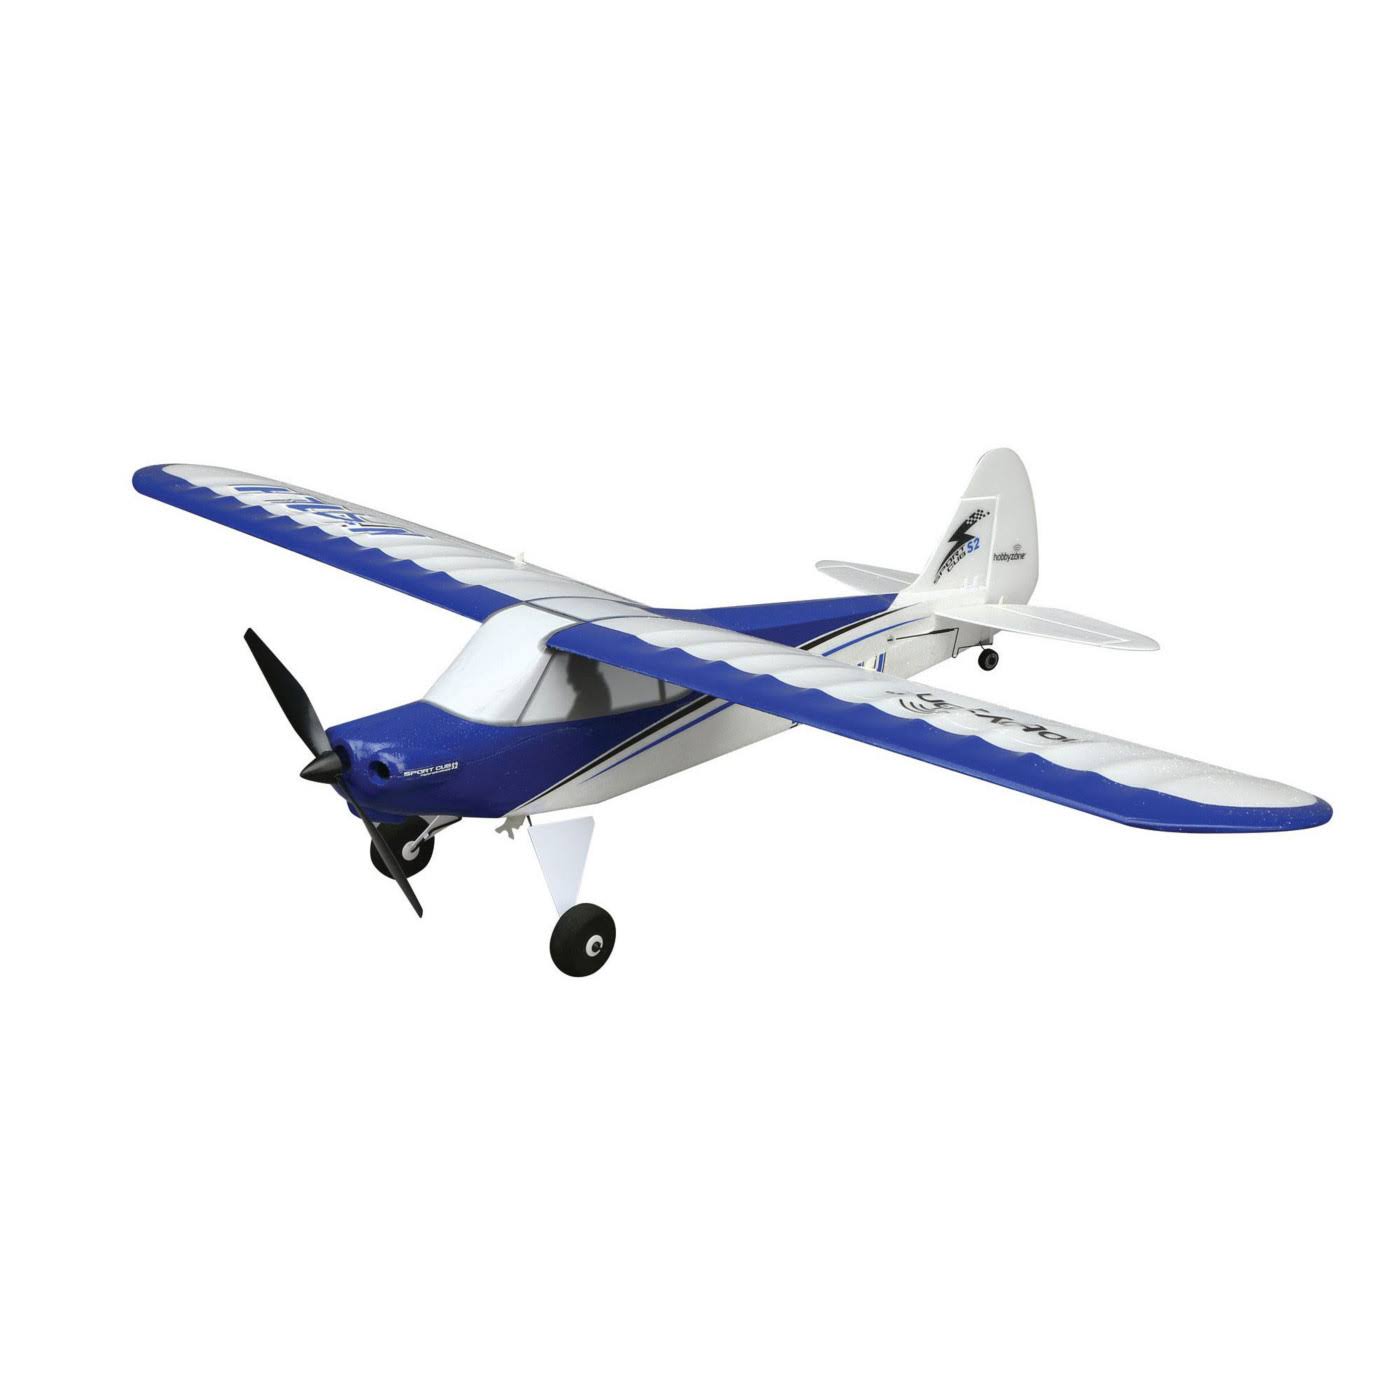 HobbyZone Sport Cub S 2 RC Airplane BNF Basic With Safe , HBZ44500, Blue & White